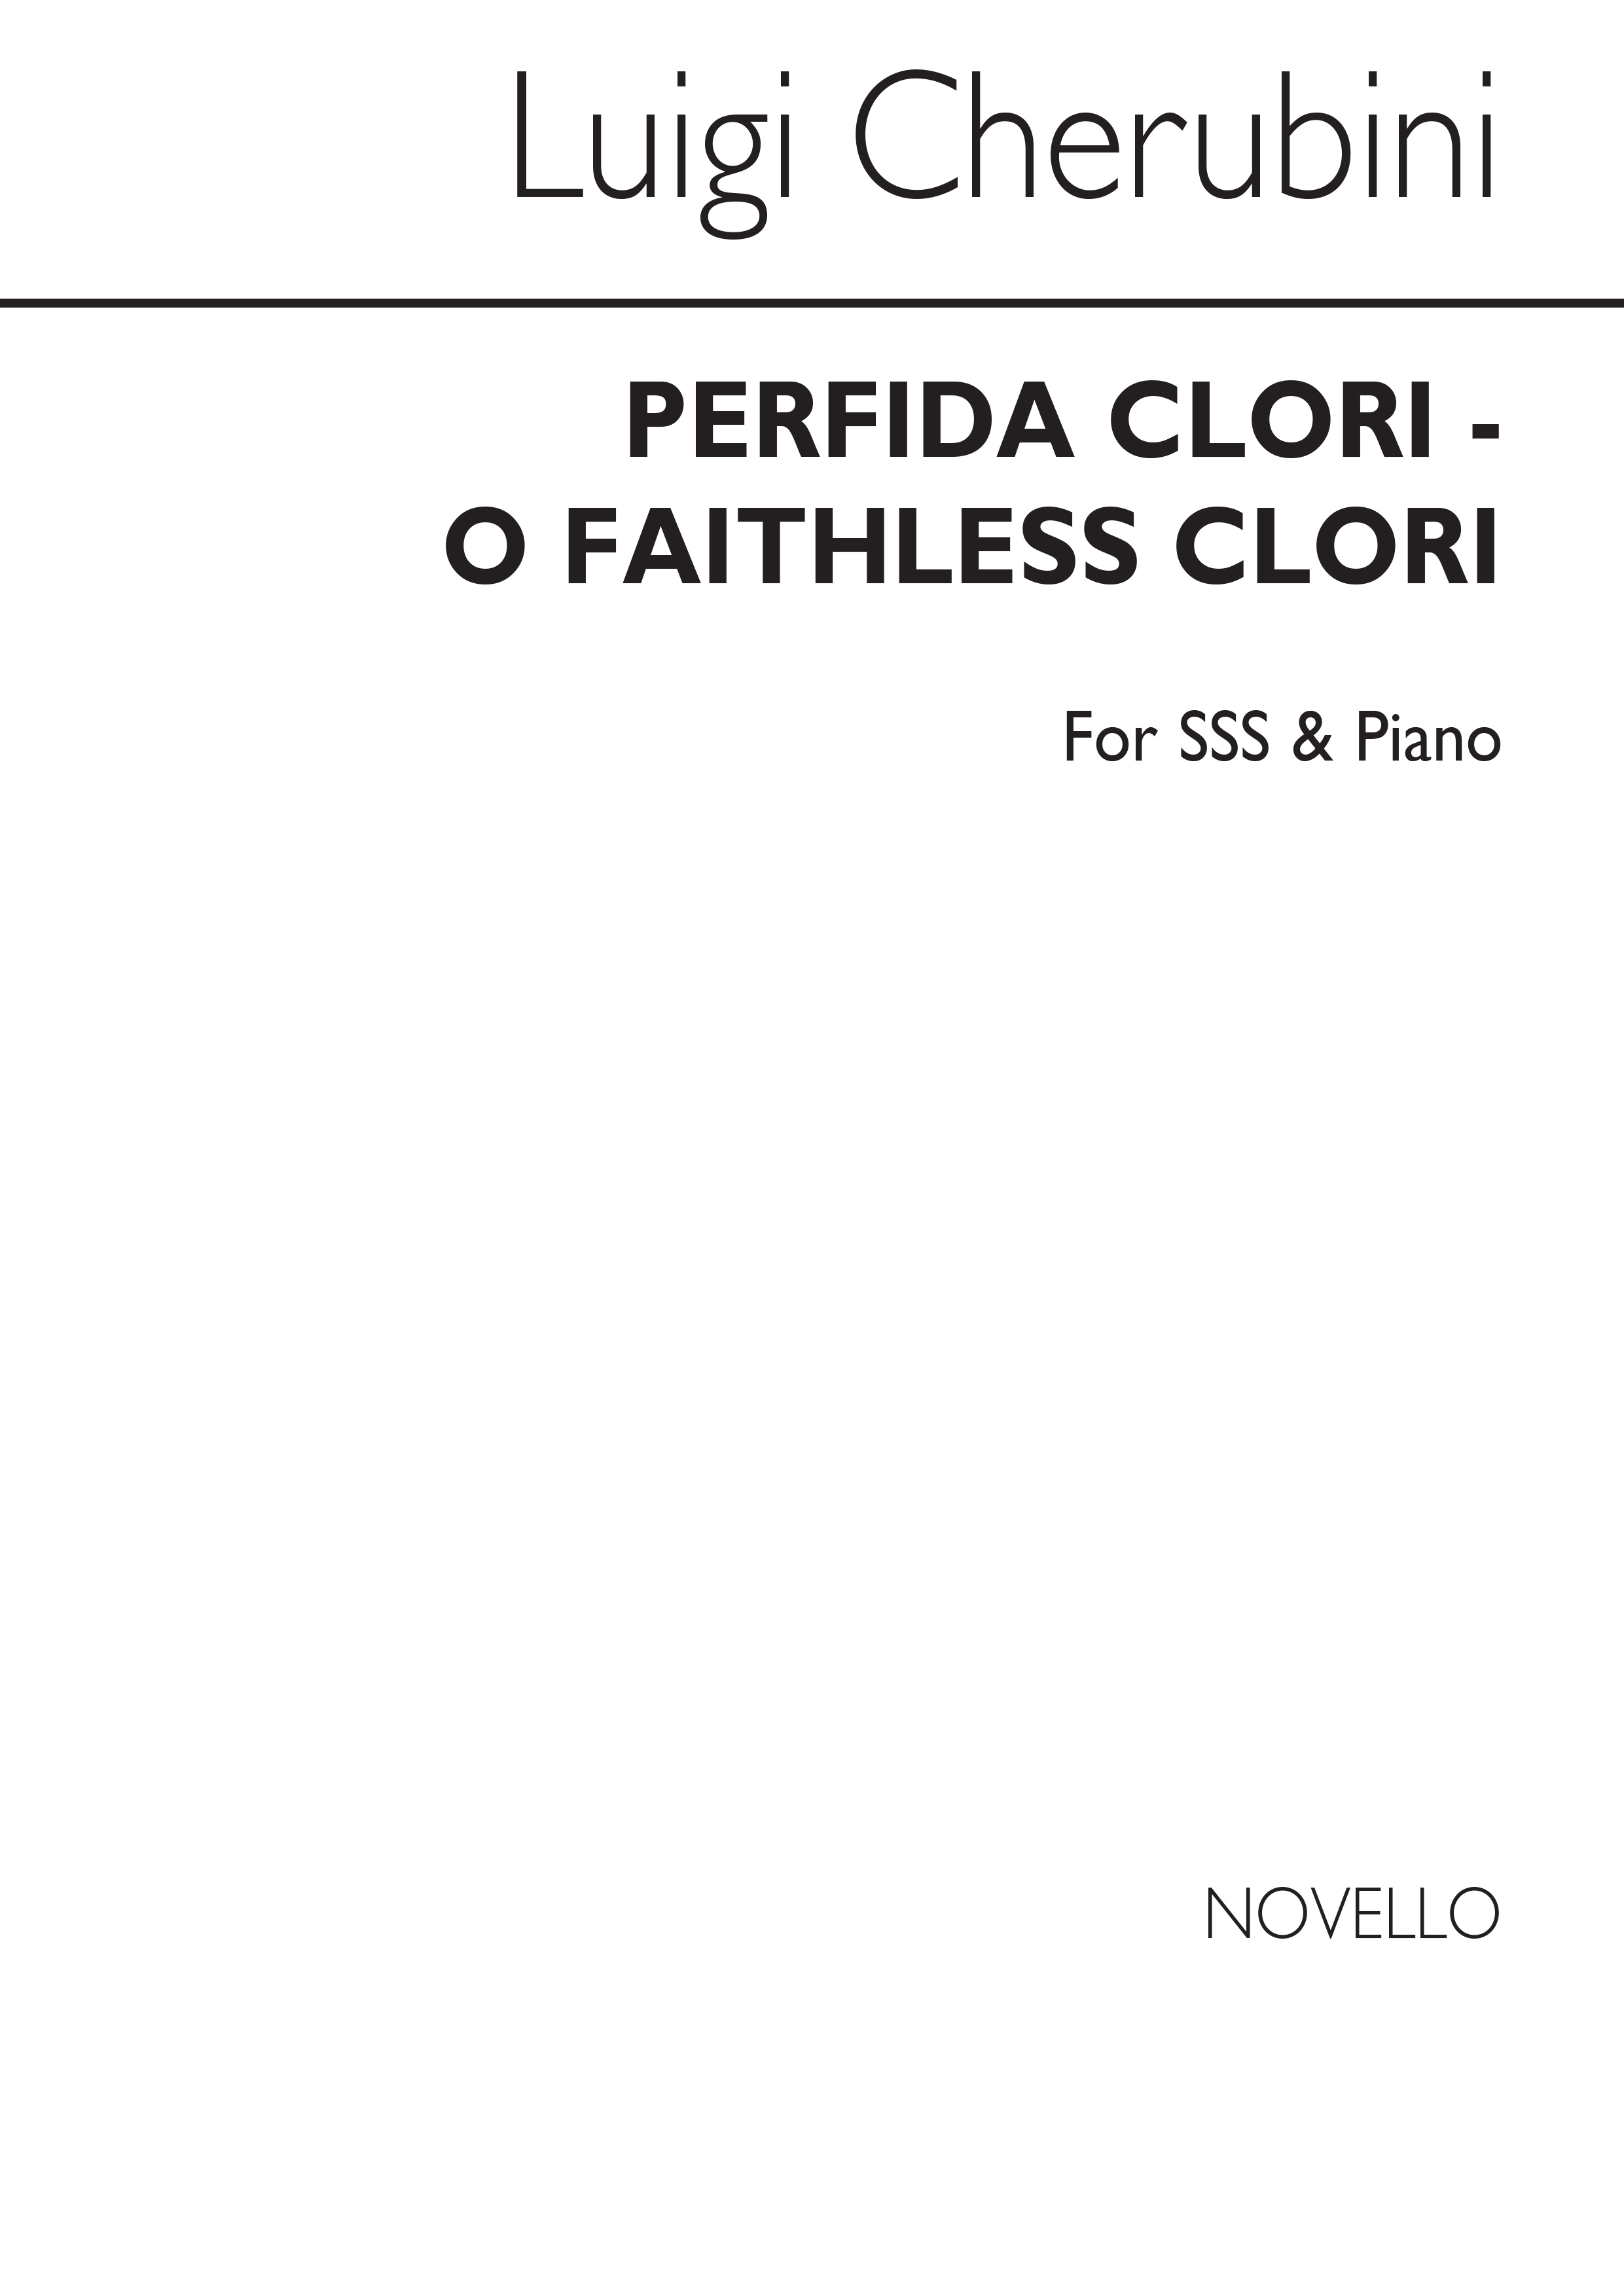 Cherubini: Perfida Clori (O Faithless Clori) Sss/Piano